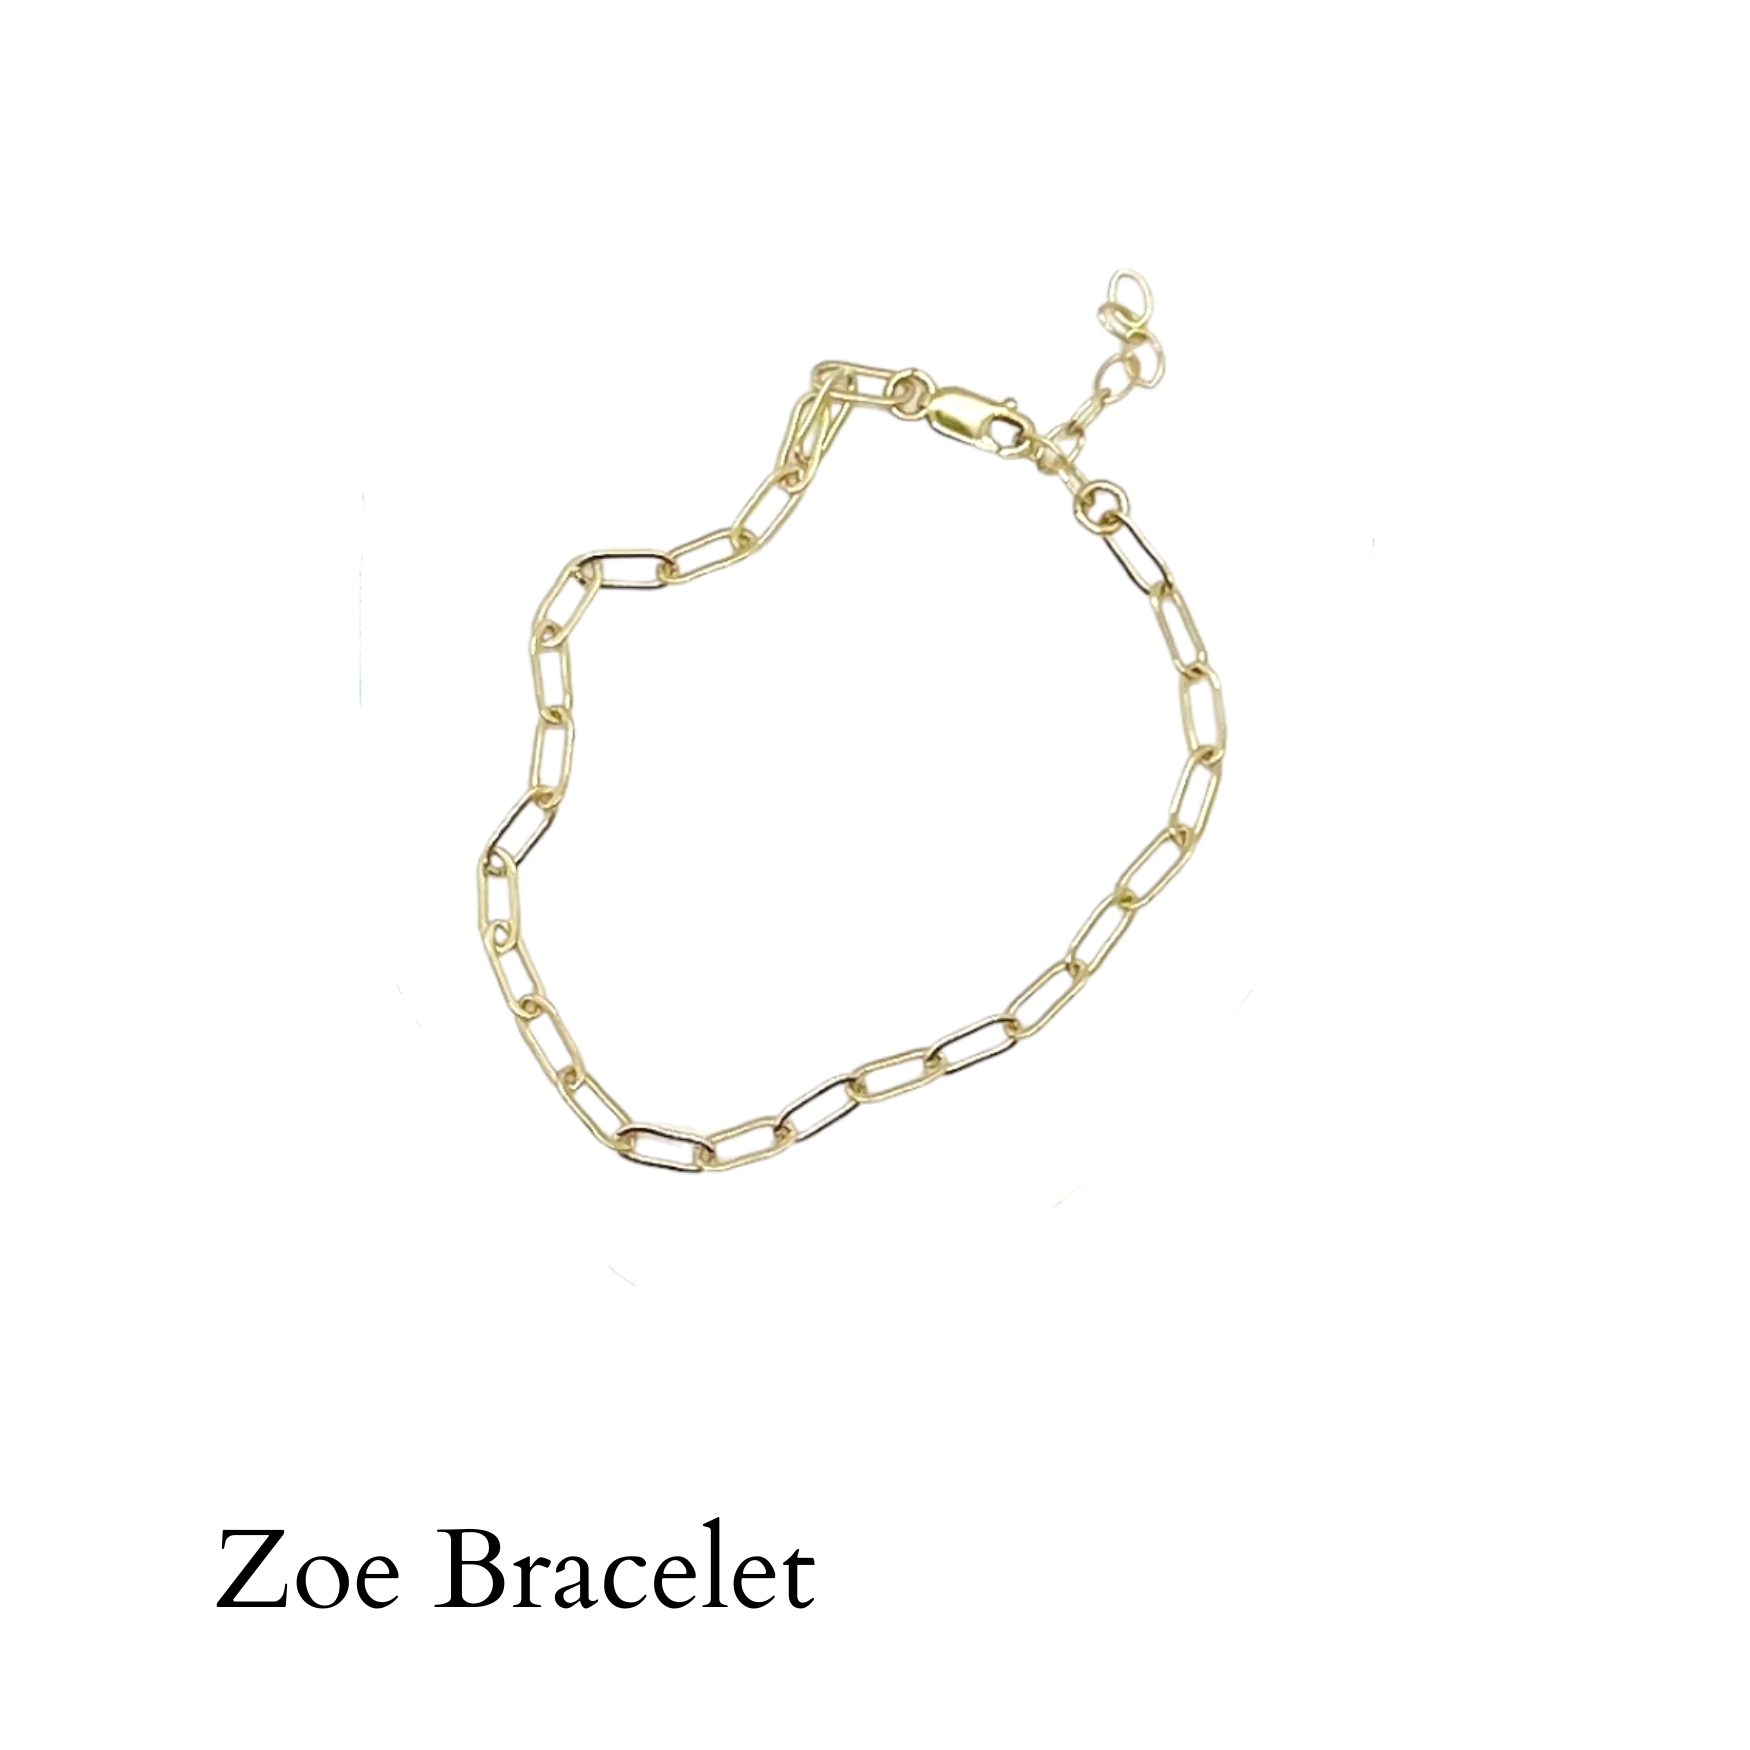 Bracelet Stack Bundle | Shirin, Zoe, Mesa